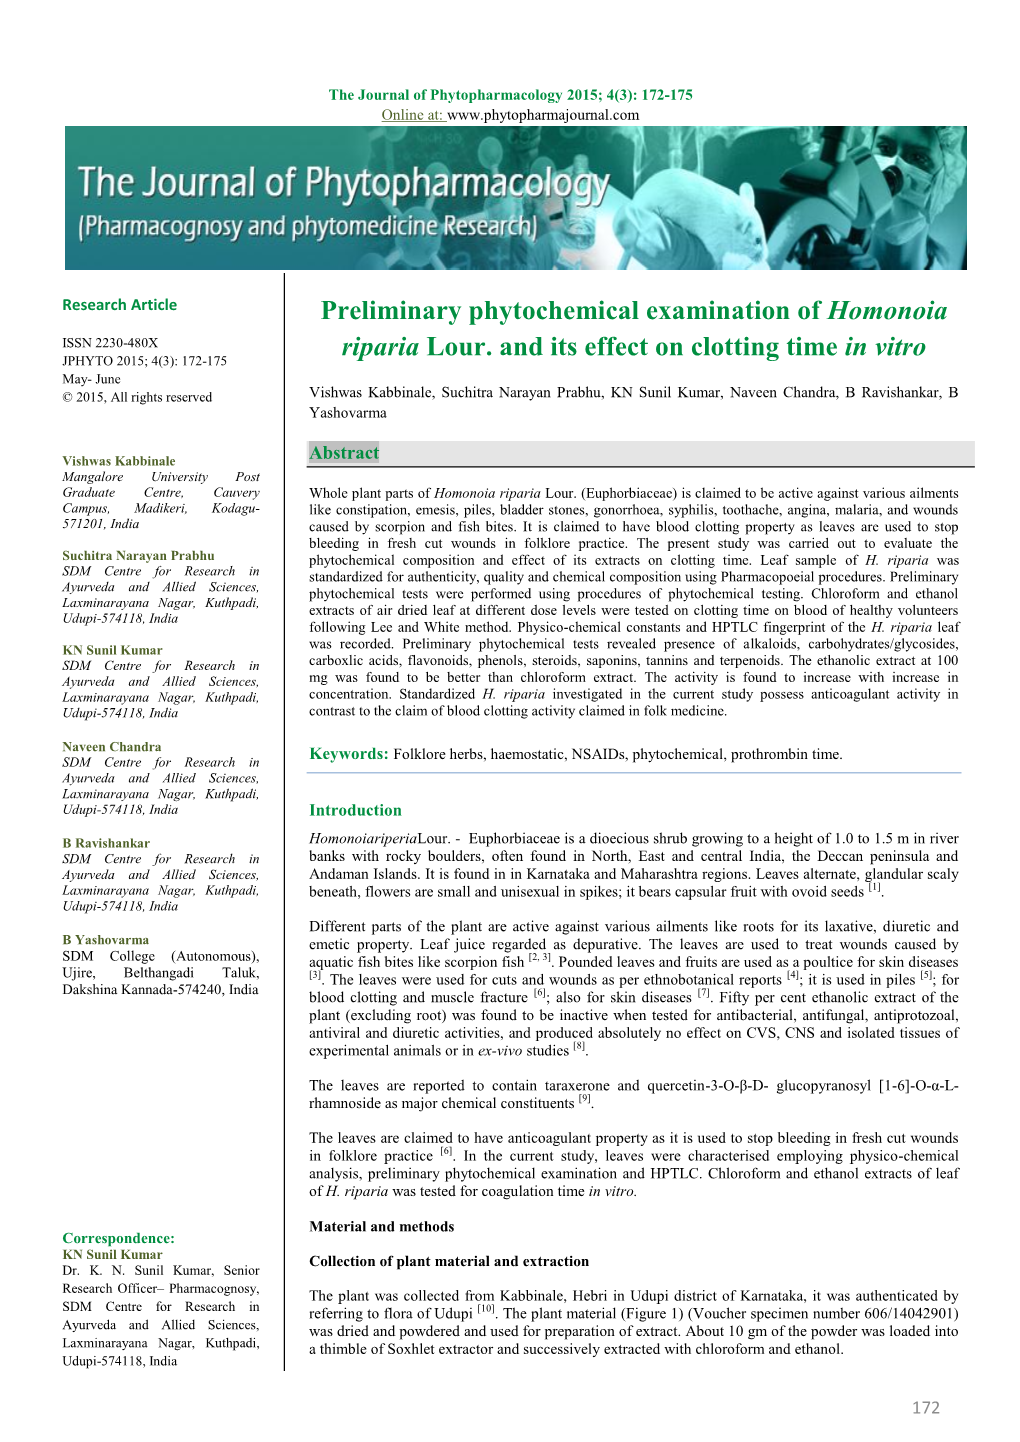 Preliminary Phytochemical Examination of Homonoia Riparia